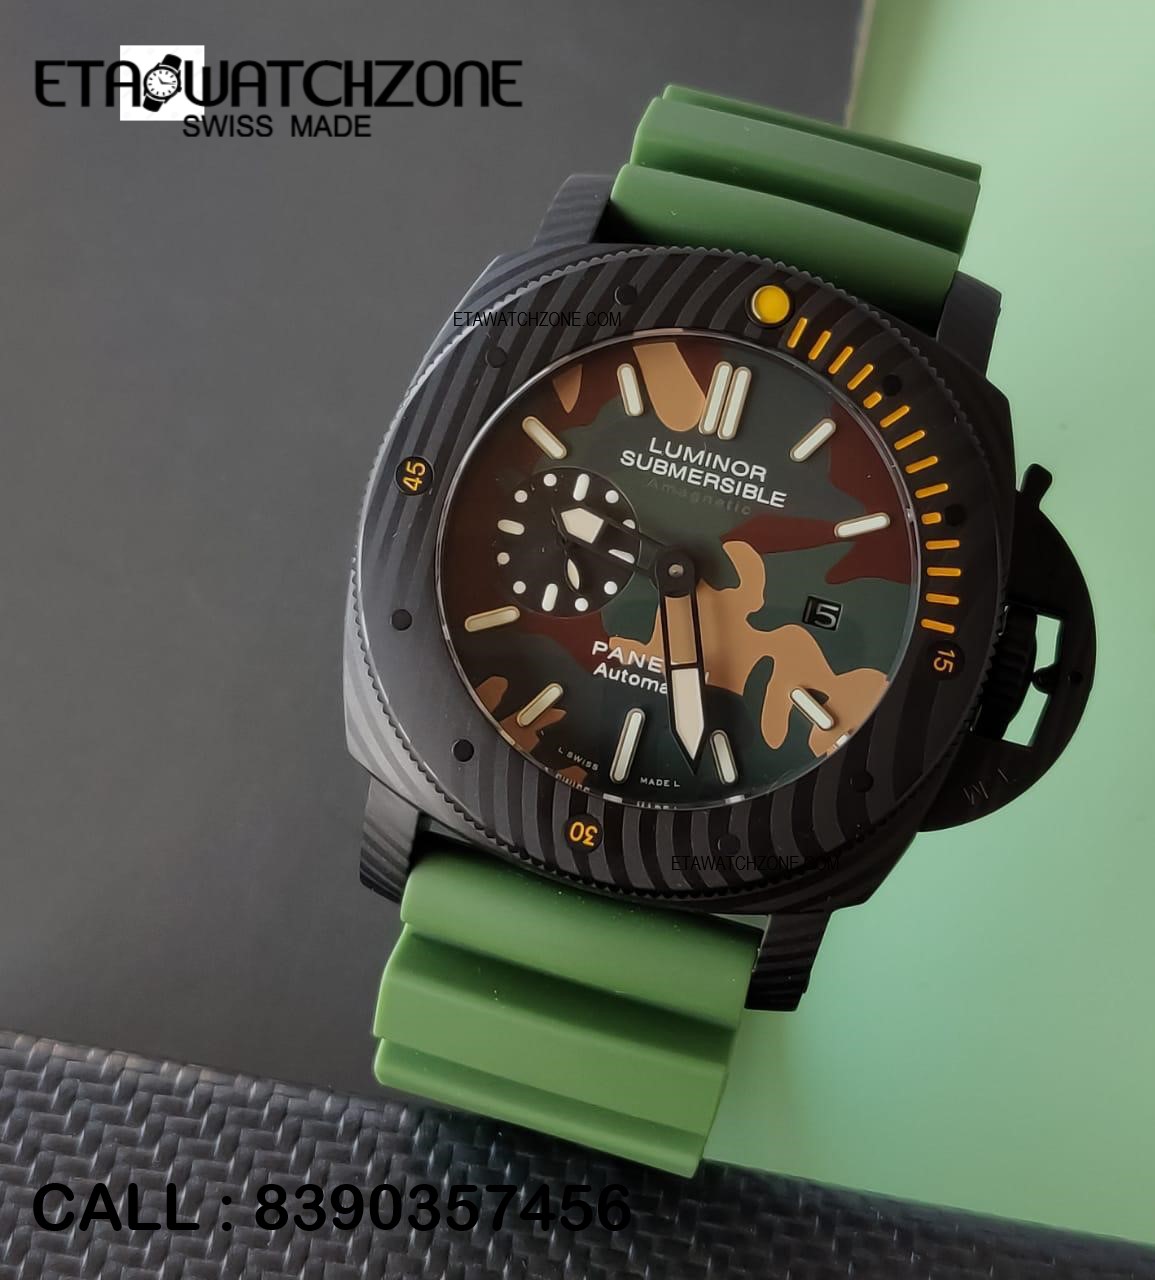 WatchZone Lebanon's Poedagar Men's Deep Sea Blue Watch - Watches - 115402766